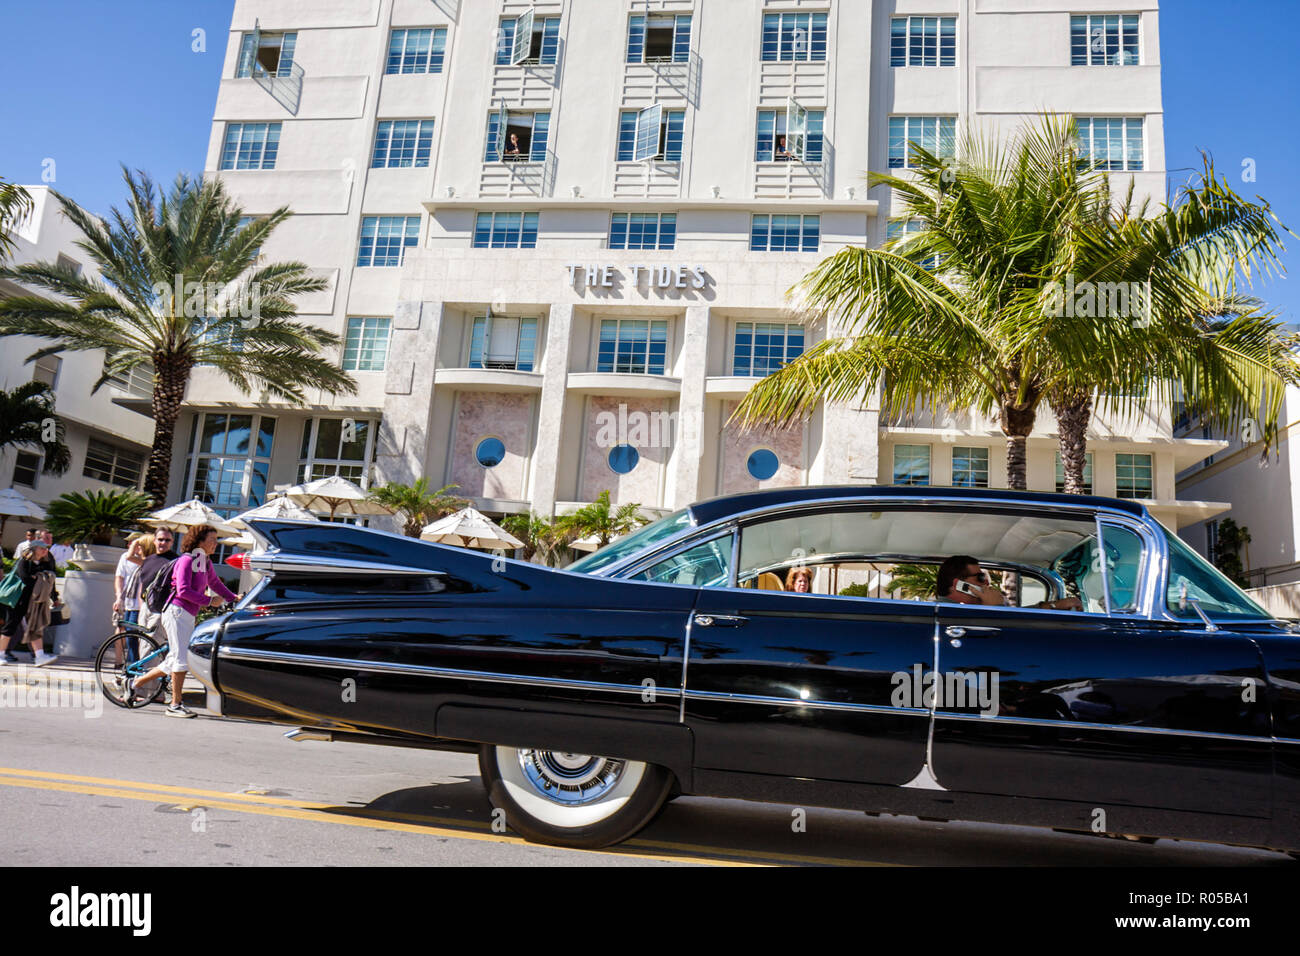 Miami Beach Florida,Ocean Drive,Art Deco Weekend,architecture,architectural,festival,event,celebration,parade,crowd,classic car cars,vintage,entertain Stock Photo